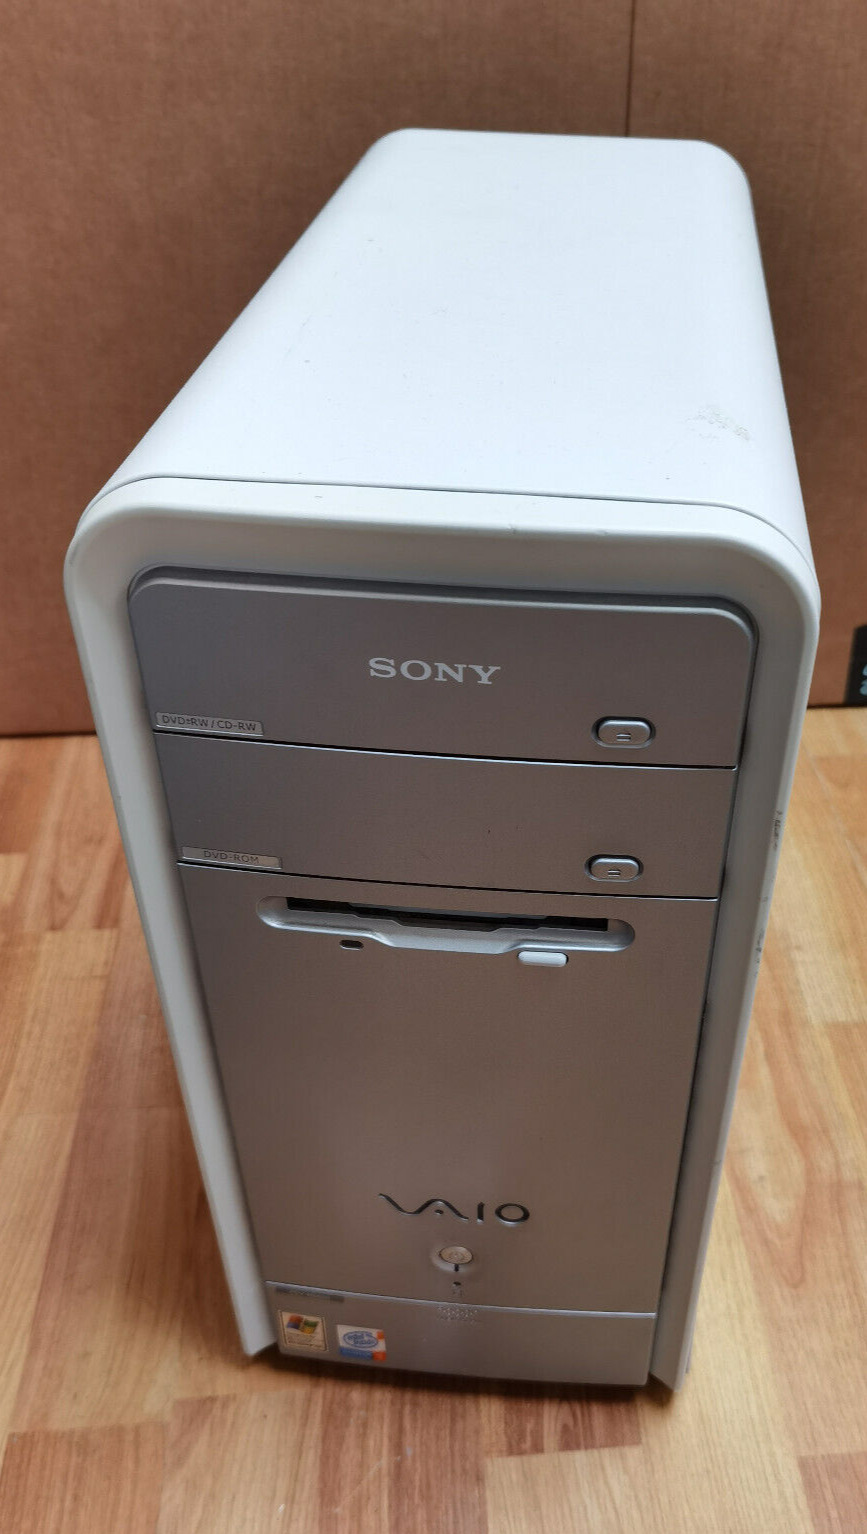 Sony VAIO Desktop Pentium 4 512mb 160GB Windows XP Home 32 PCV-2242 3GHz 